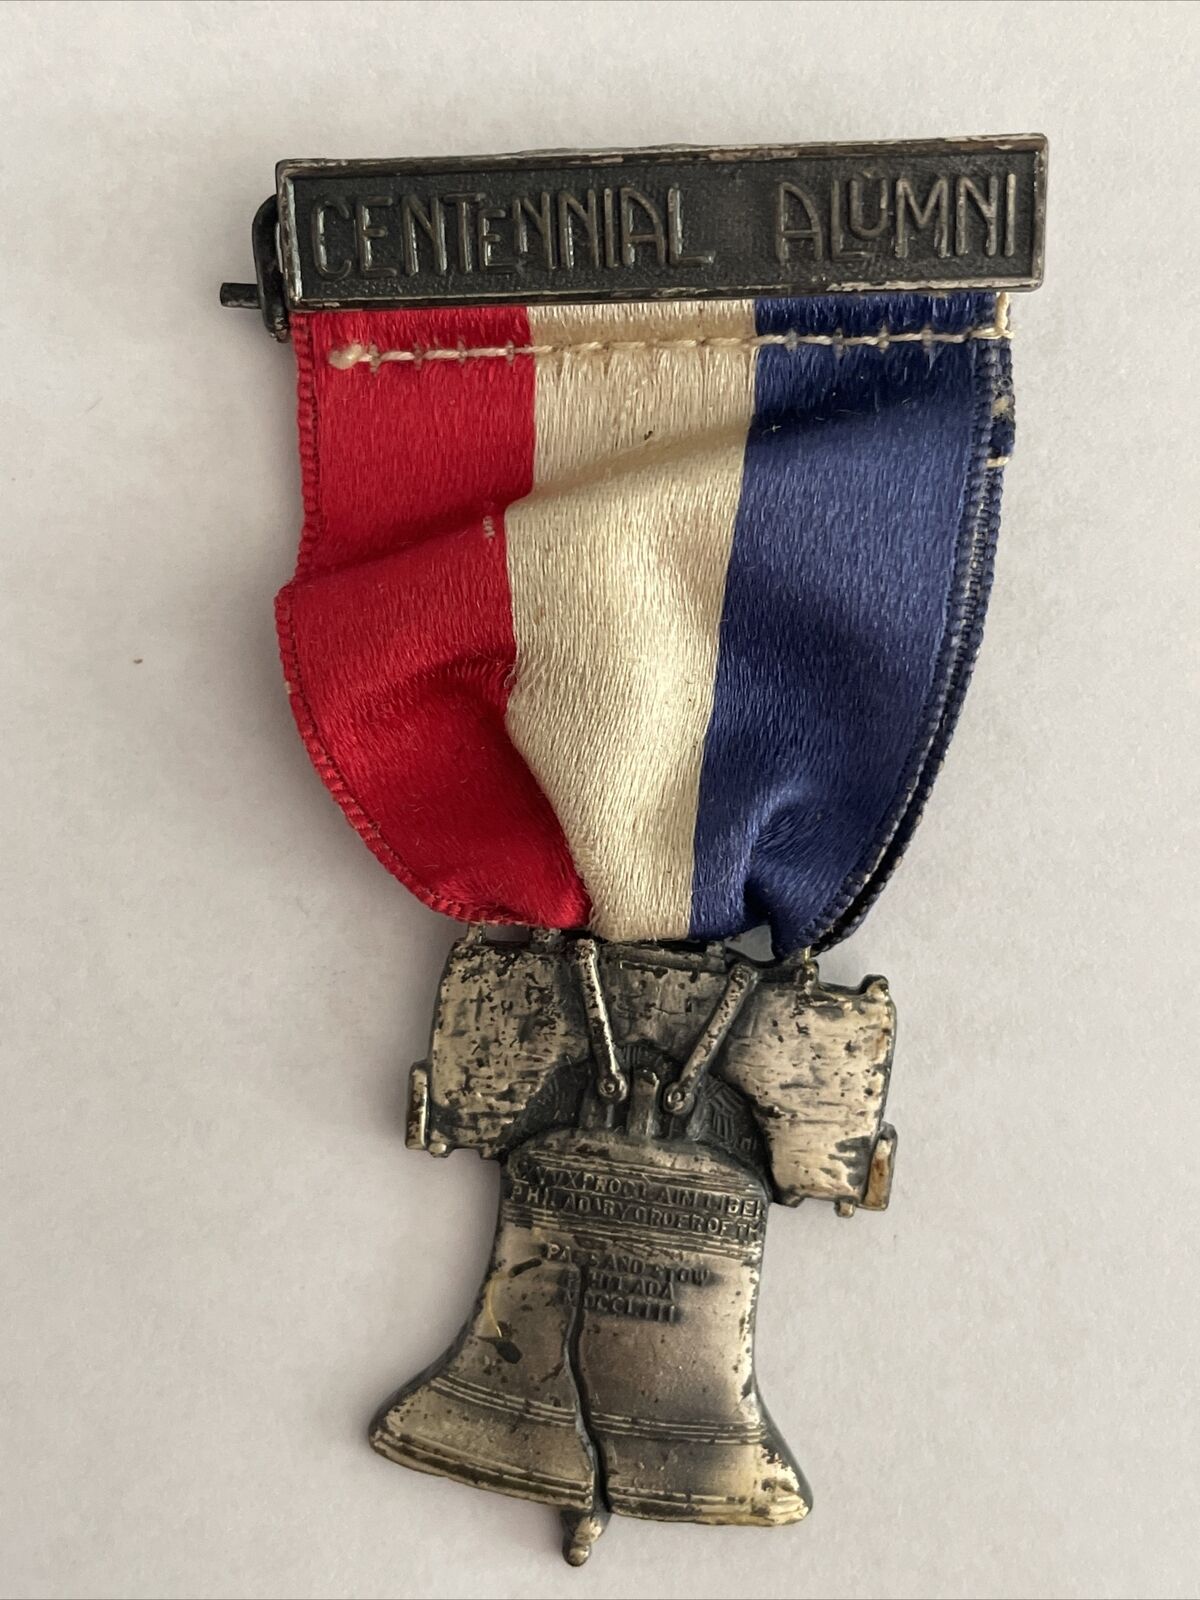 Vintage 1926 Philadelphia Centennial Alumni Liberty Bell Medal Badge Souvenir